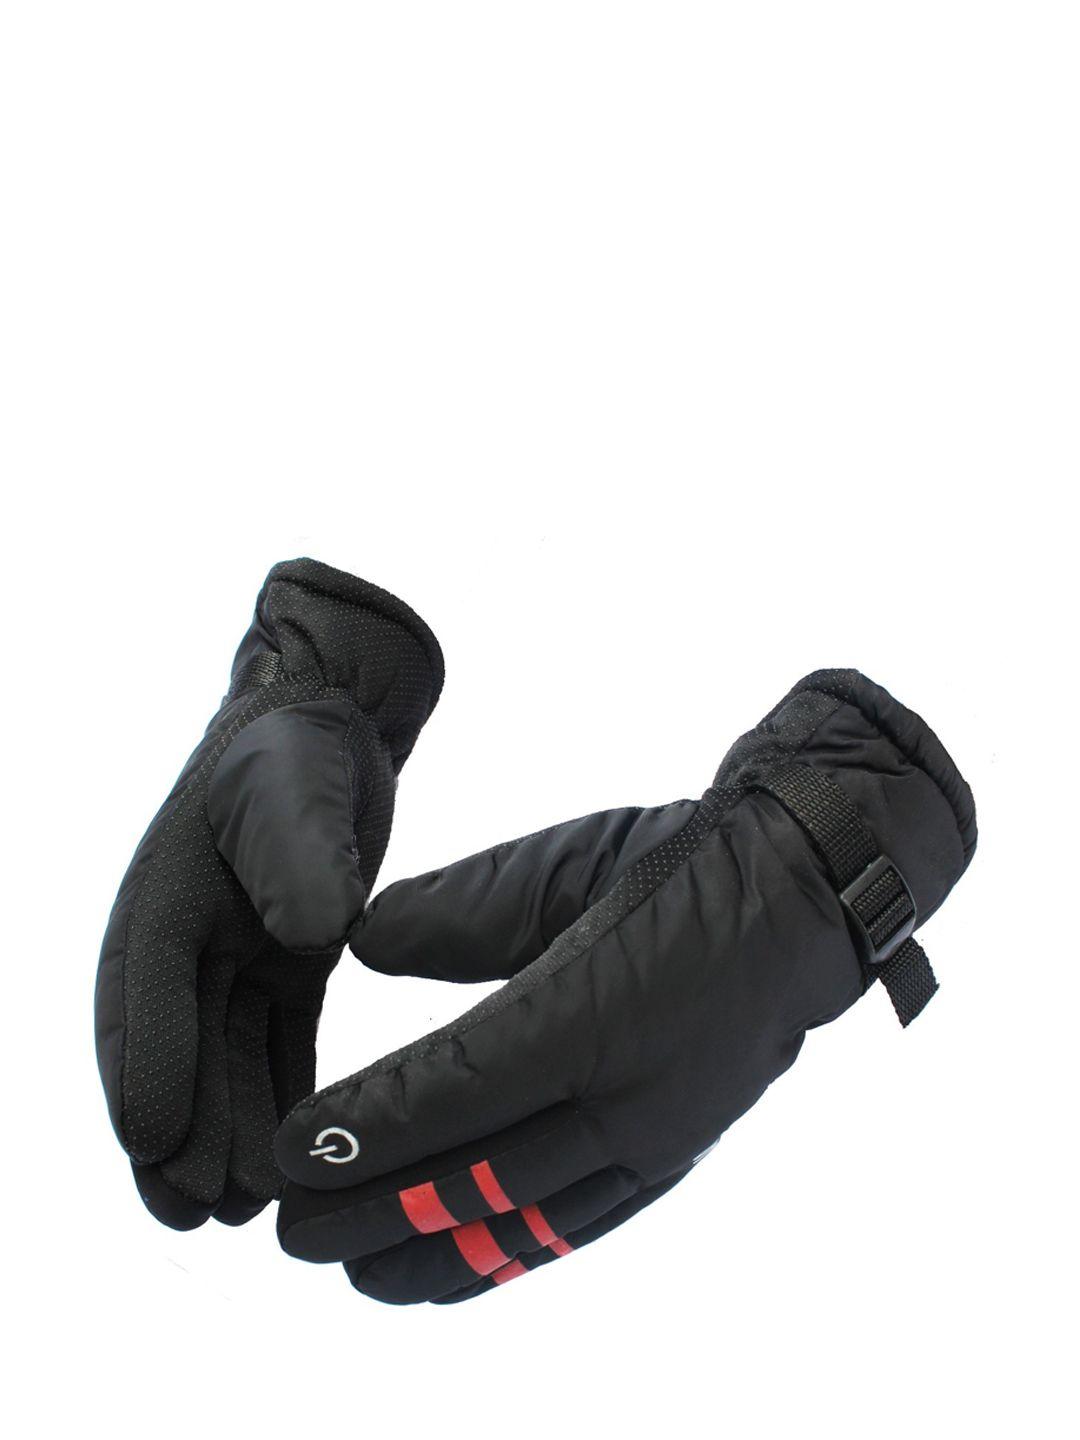 alexvyan men windproof thermal warm winter gloves